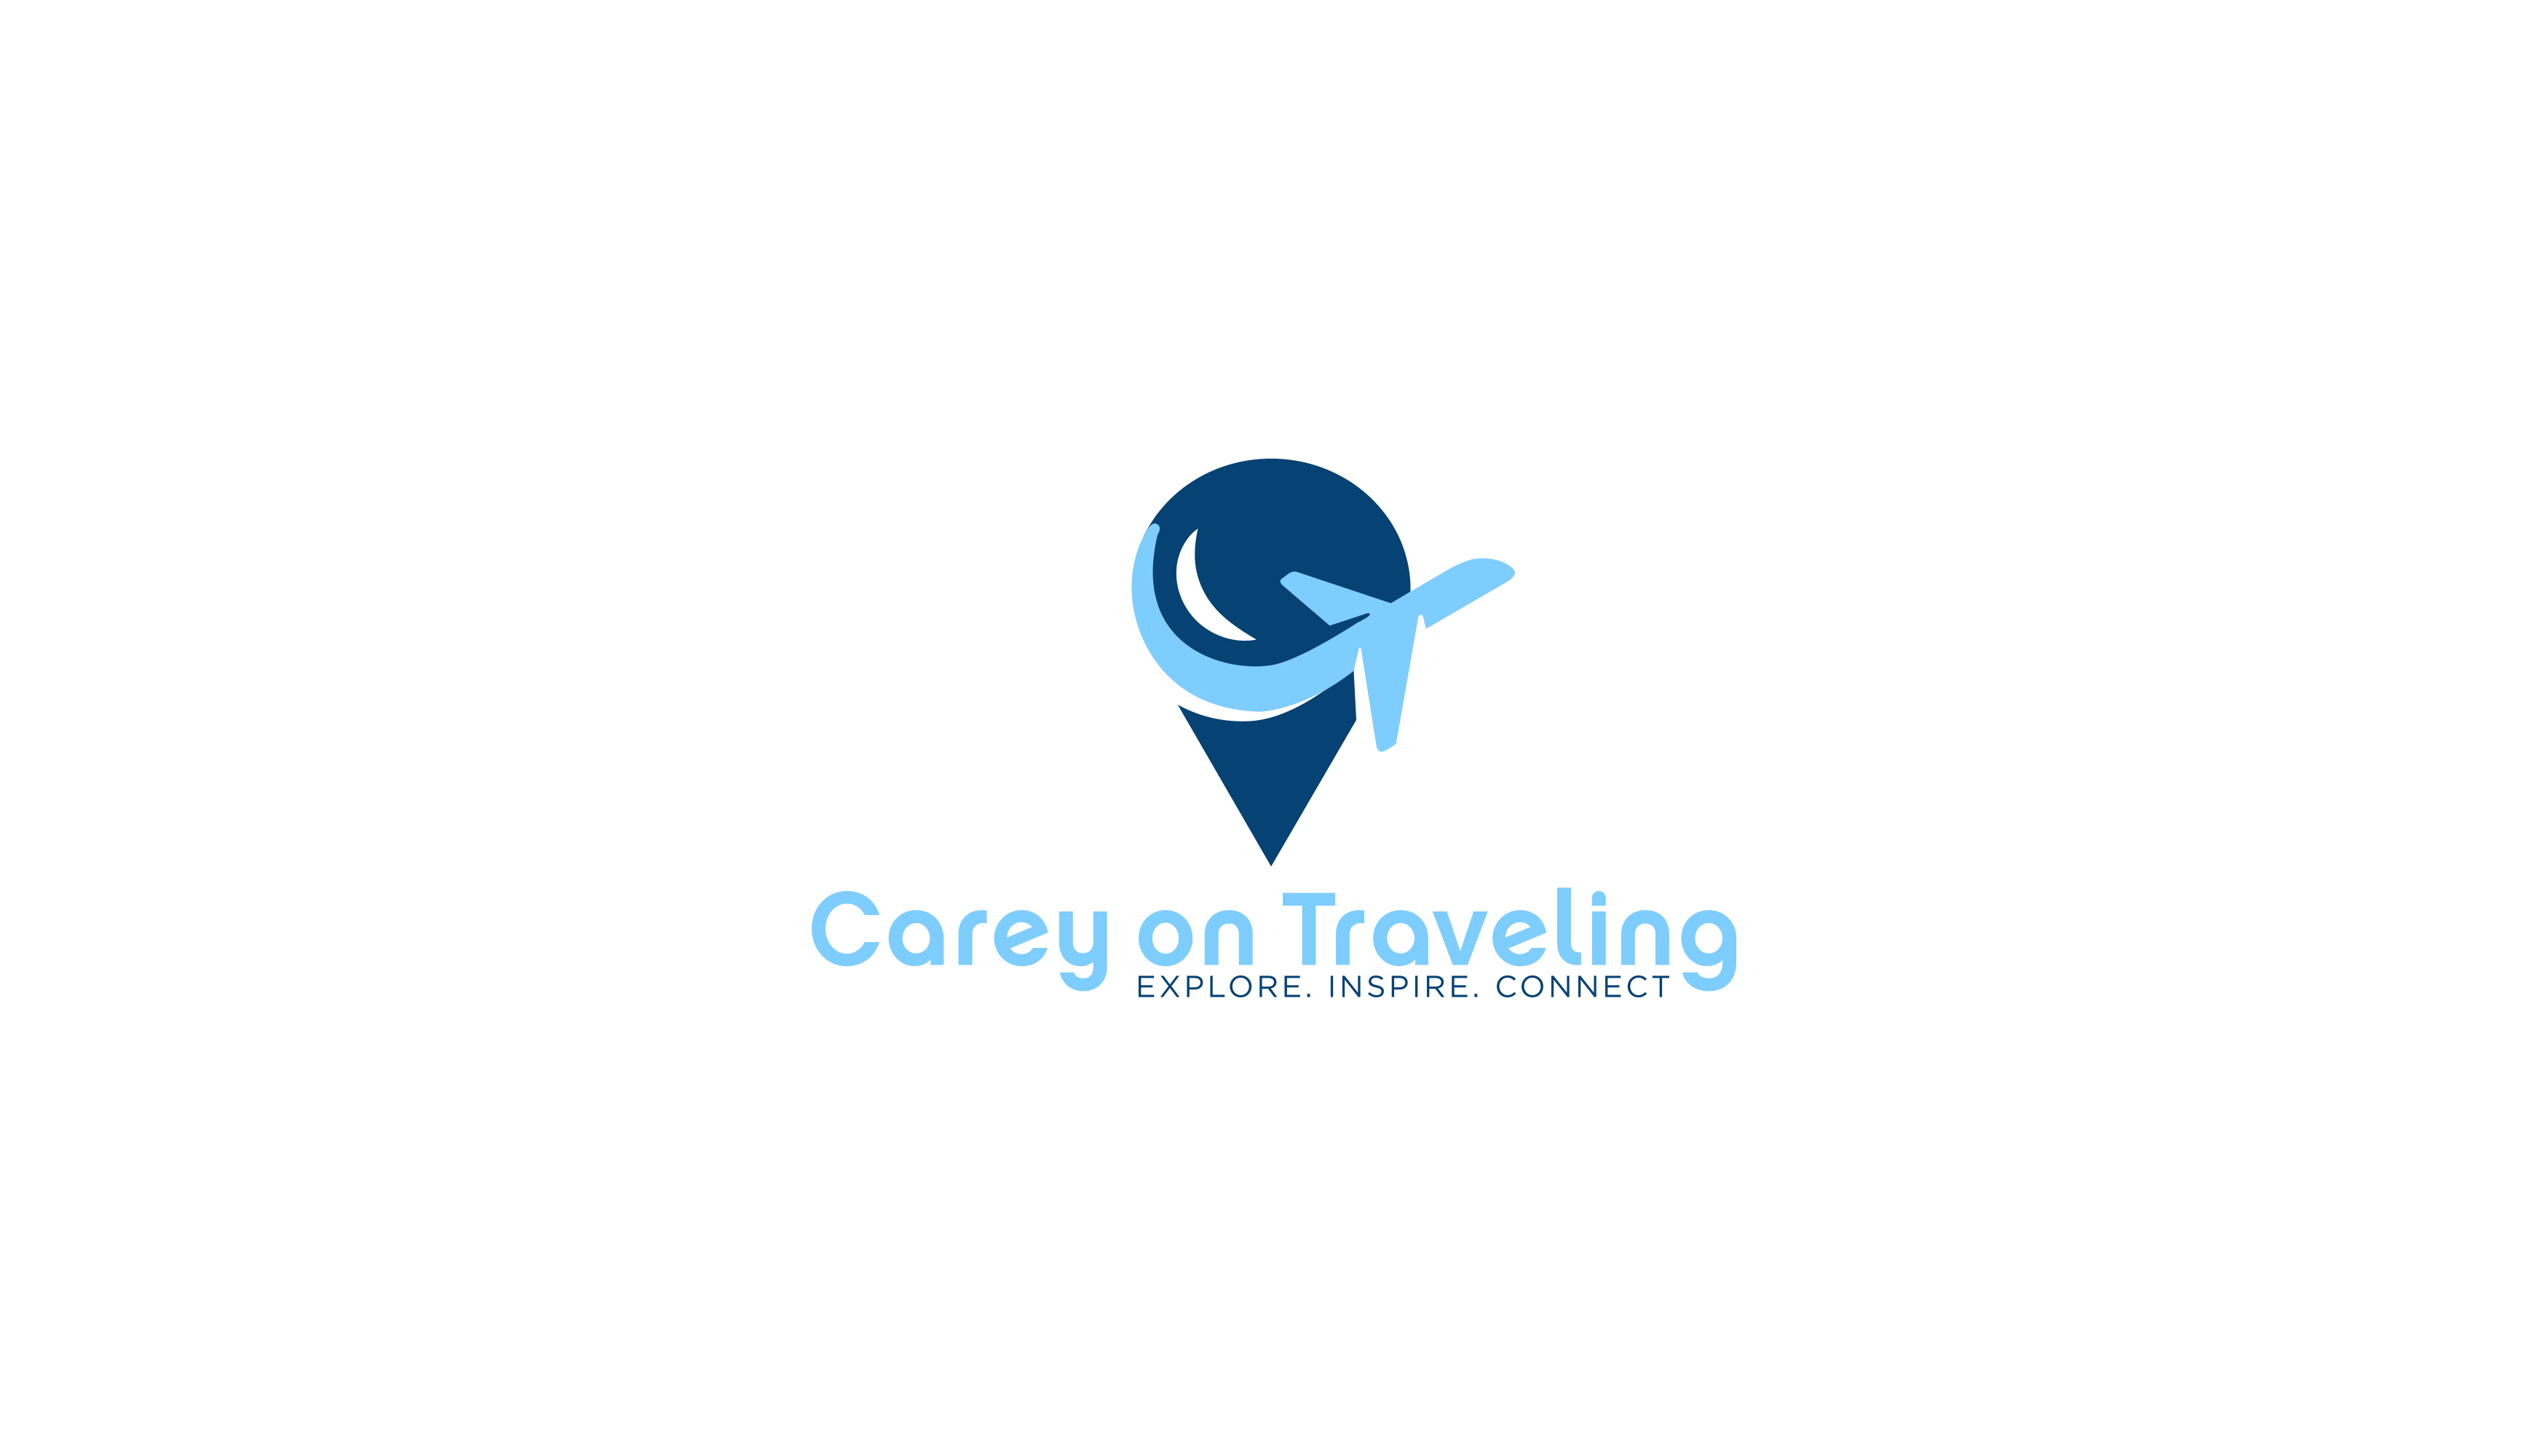 Carey On Traveling Design #2